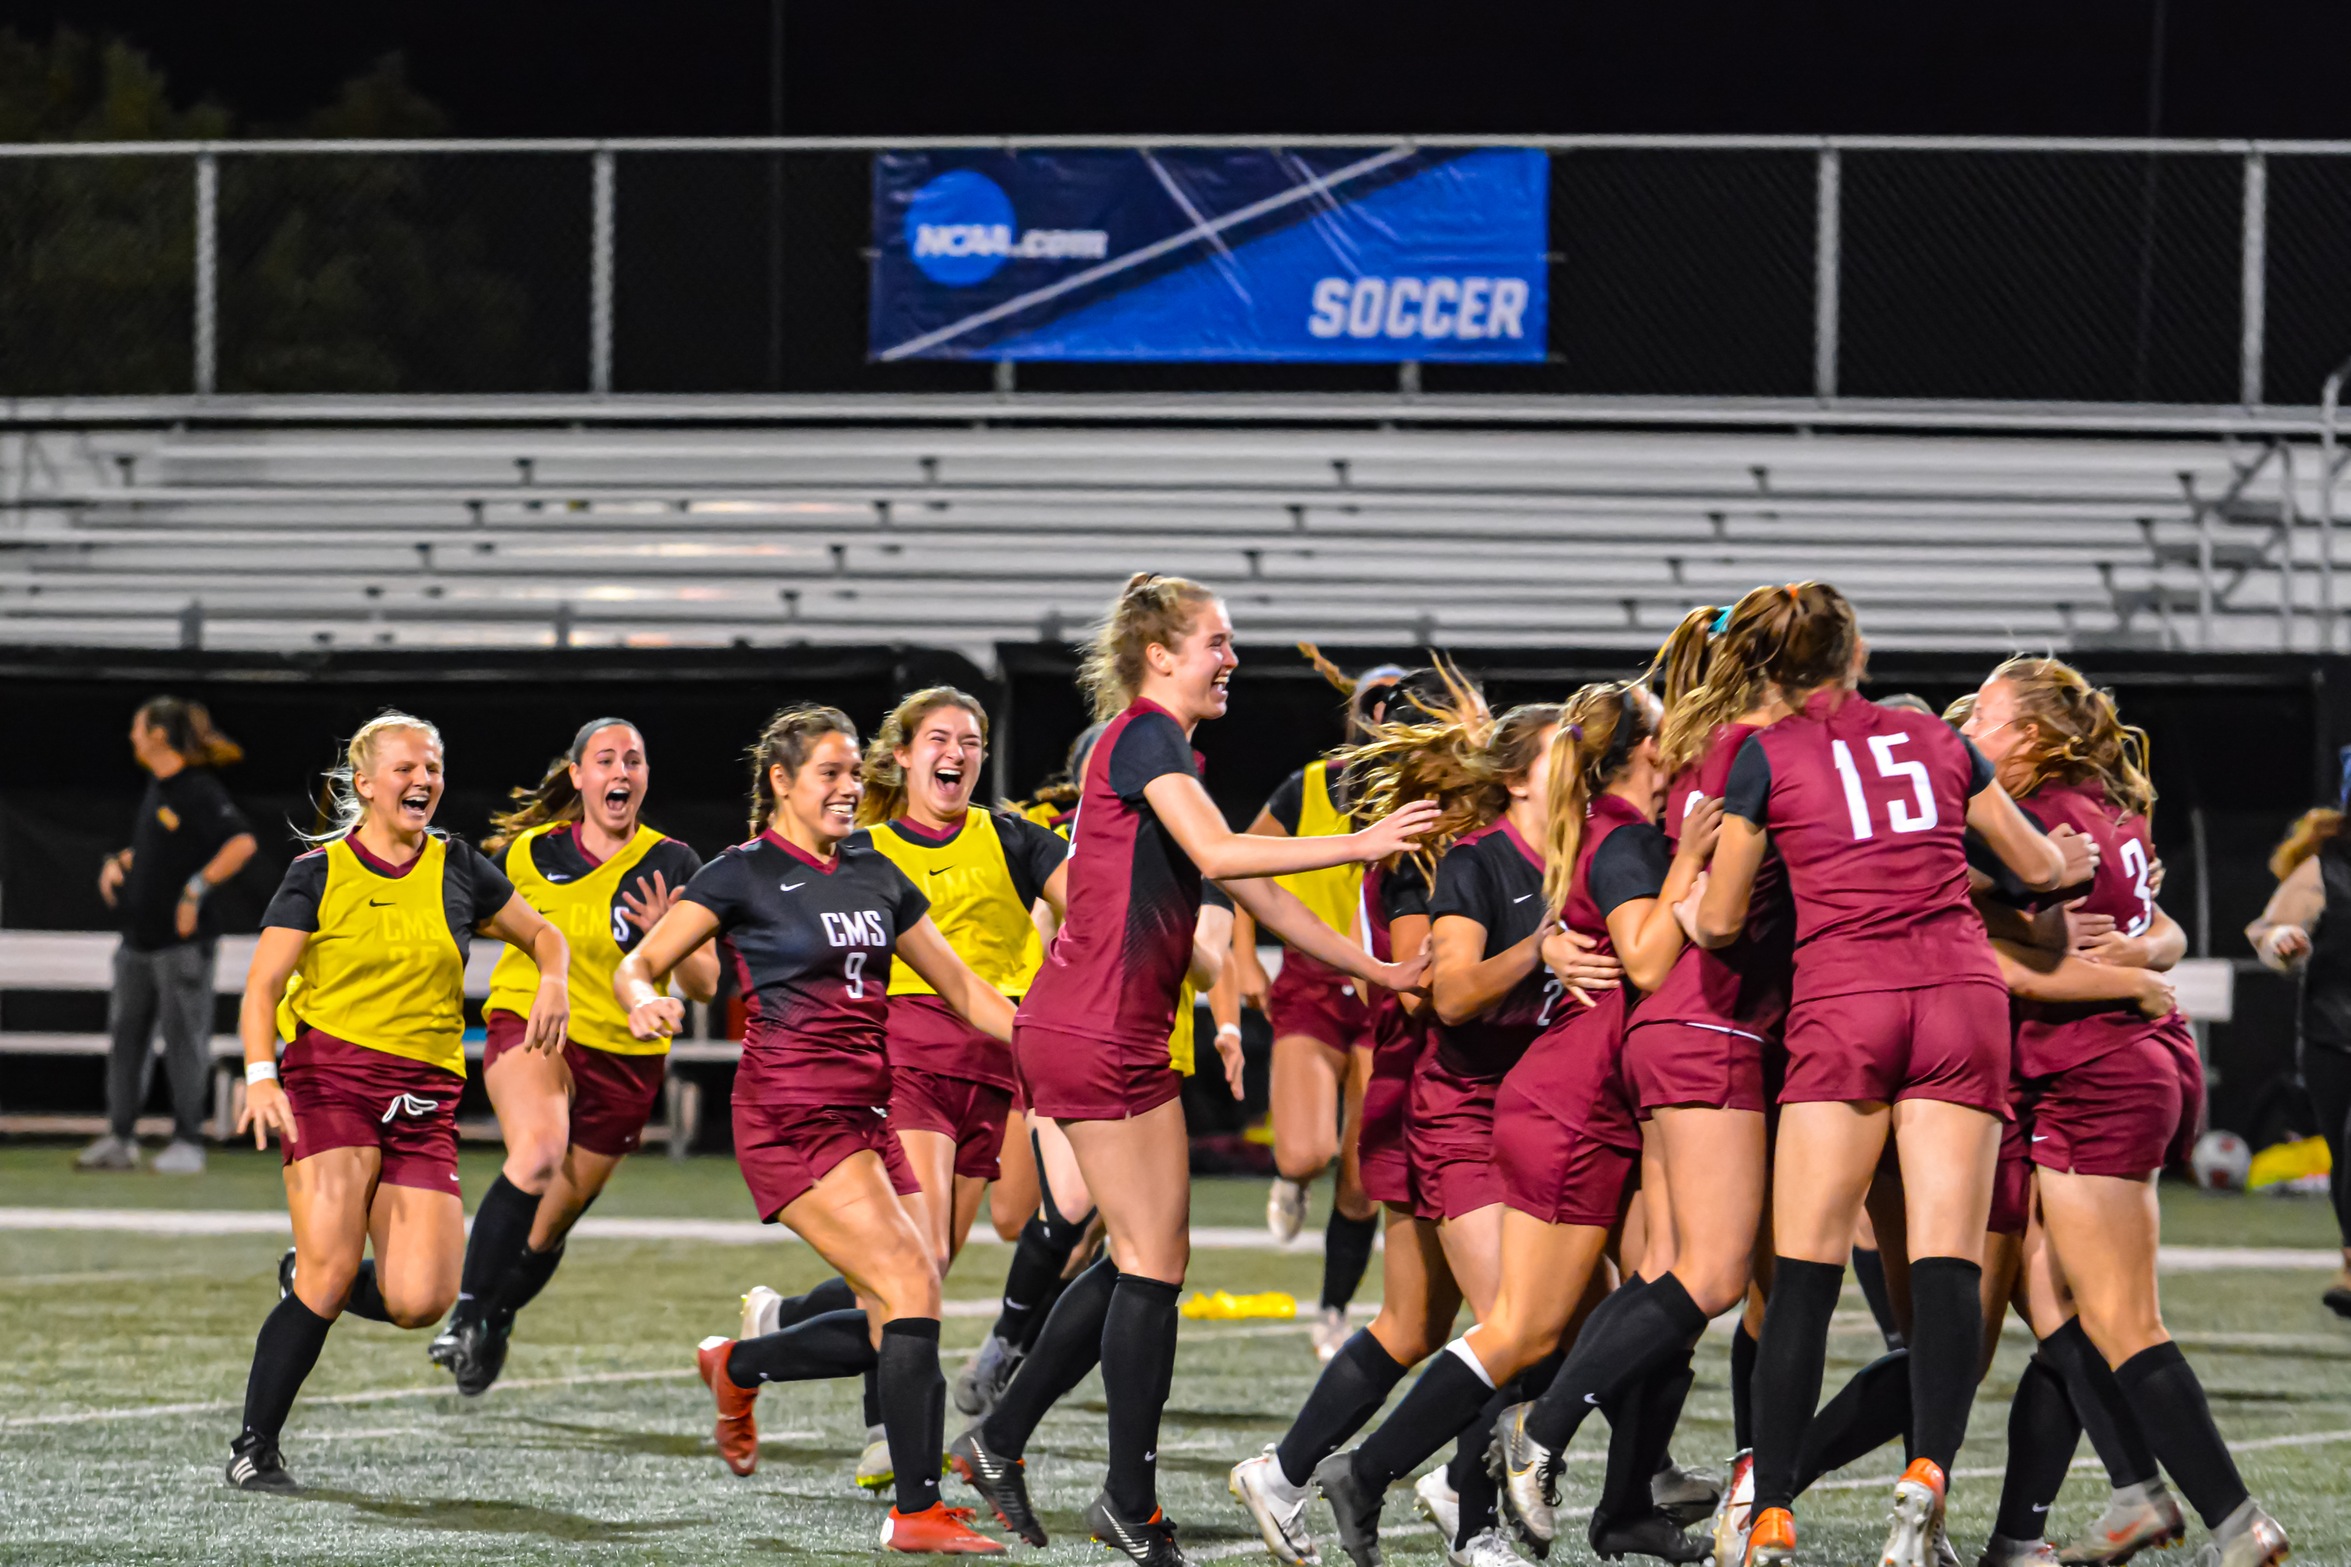 CMS Women's Soccer celebrating its 2019 NCAA regional title